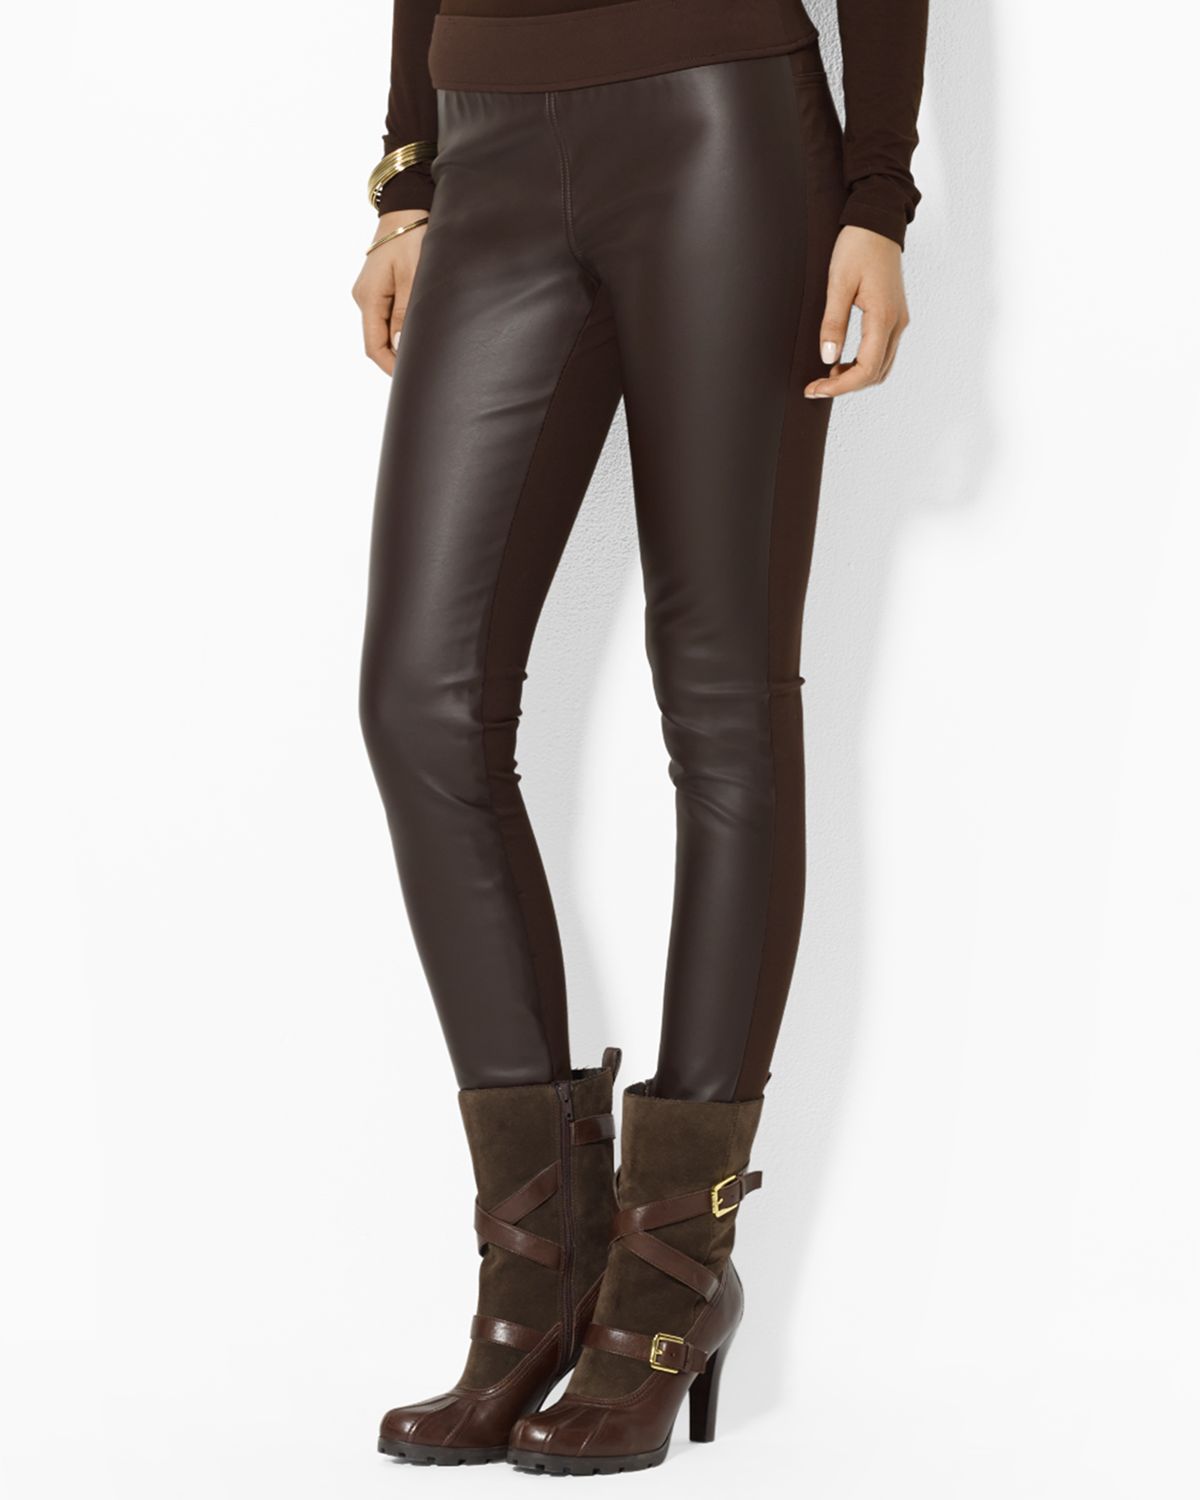 https://cdnb.lystit.com/photos/2013/11/05/lauren-by-ralph-lauren-pike-brown-faux-leather-leggings-product-1-14709093-412999924.jpeg